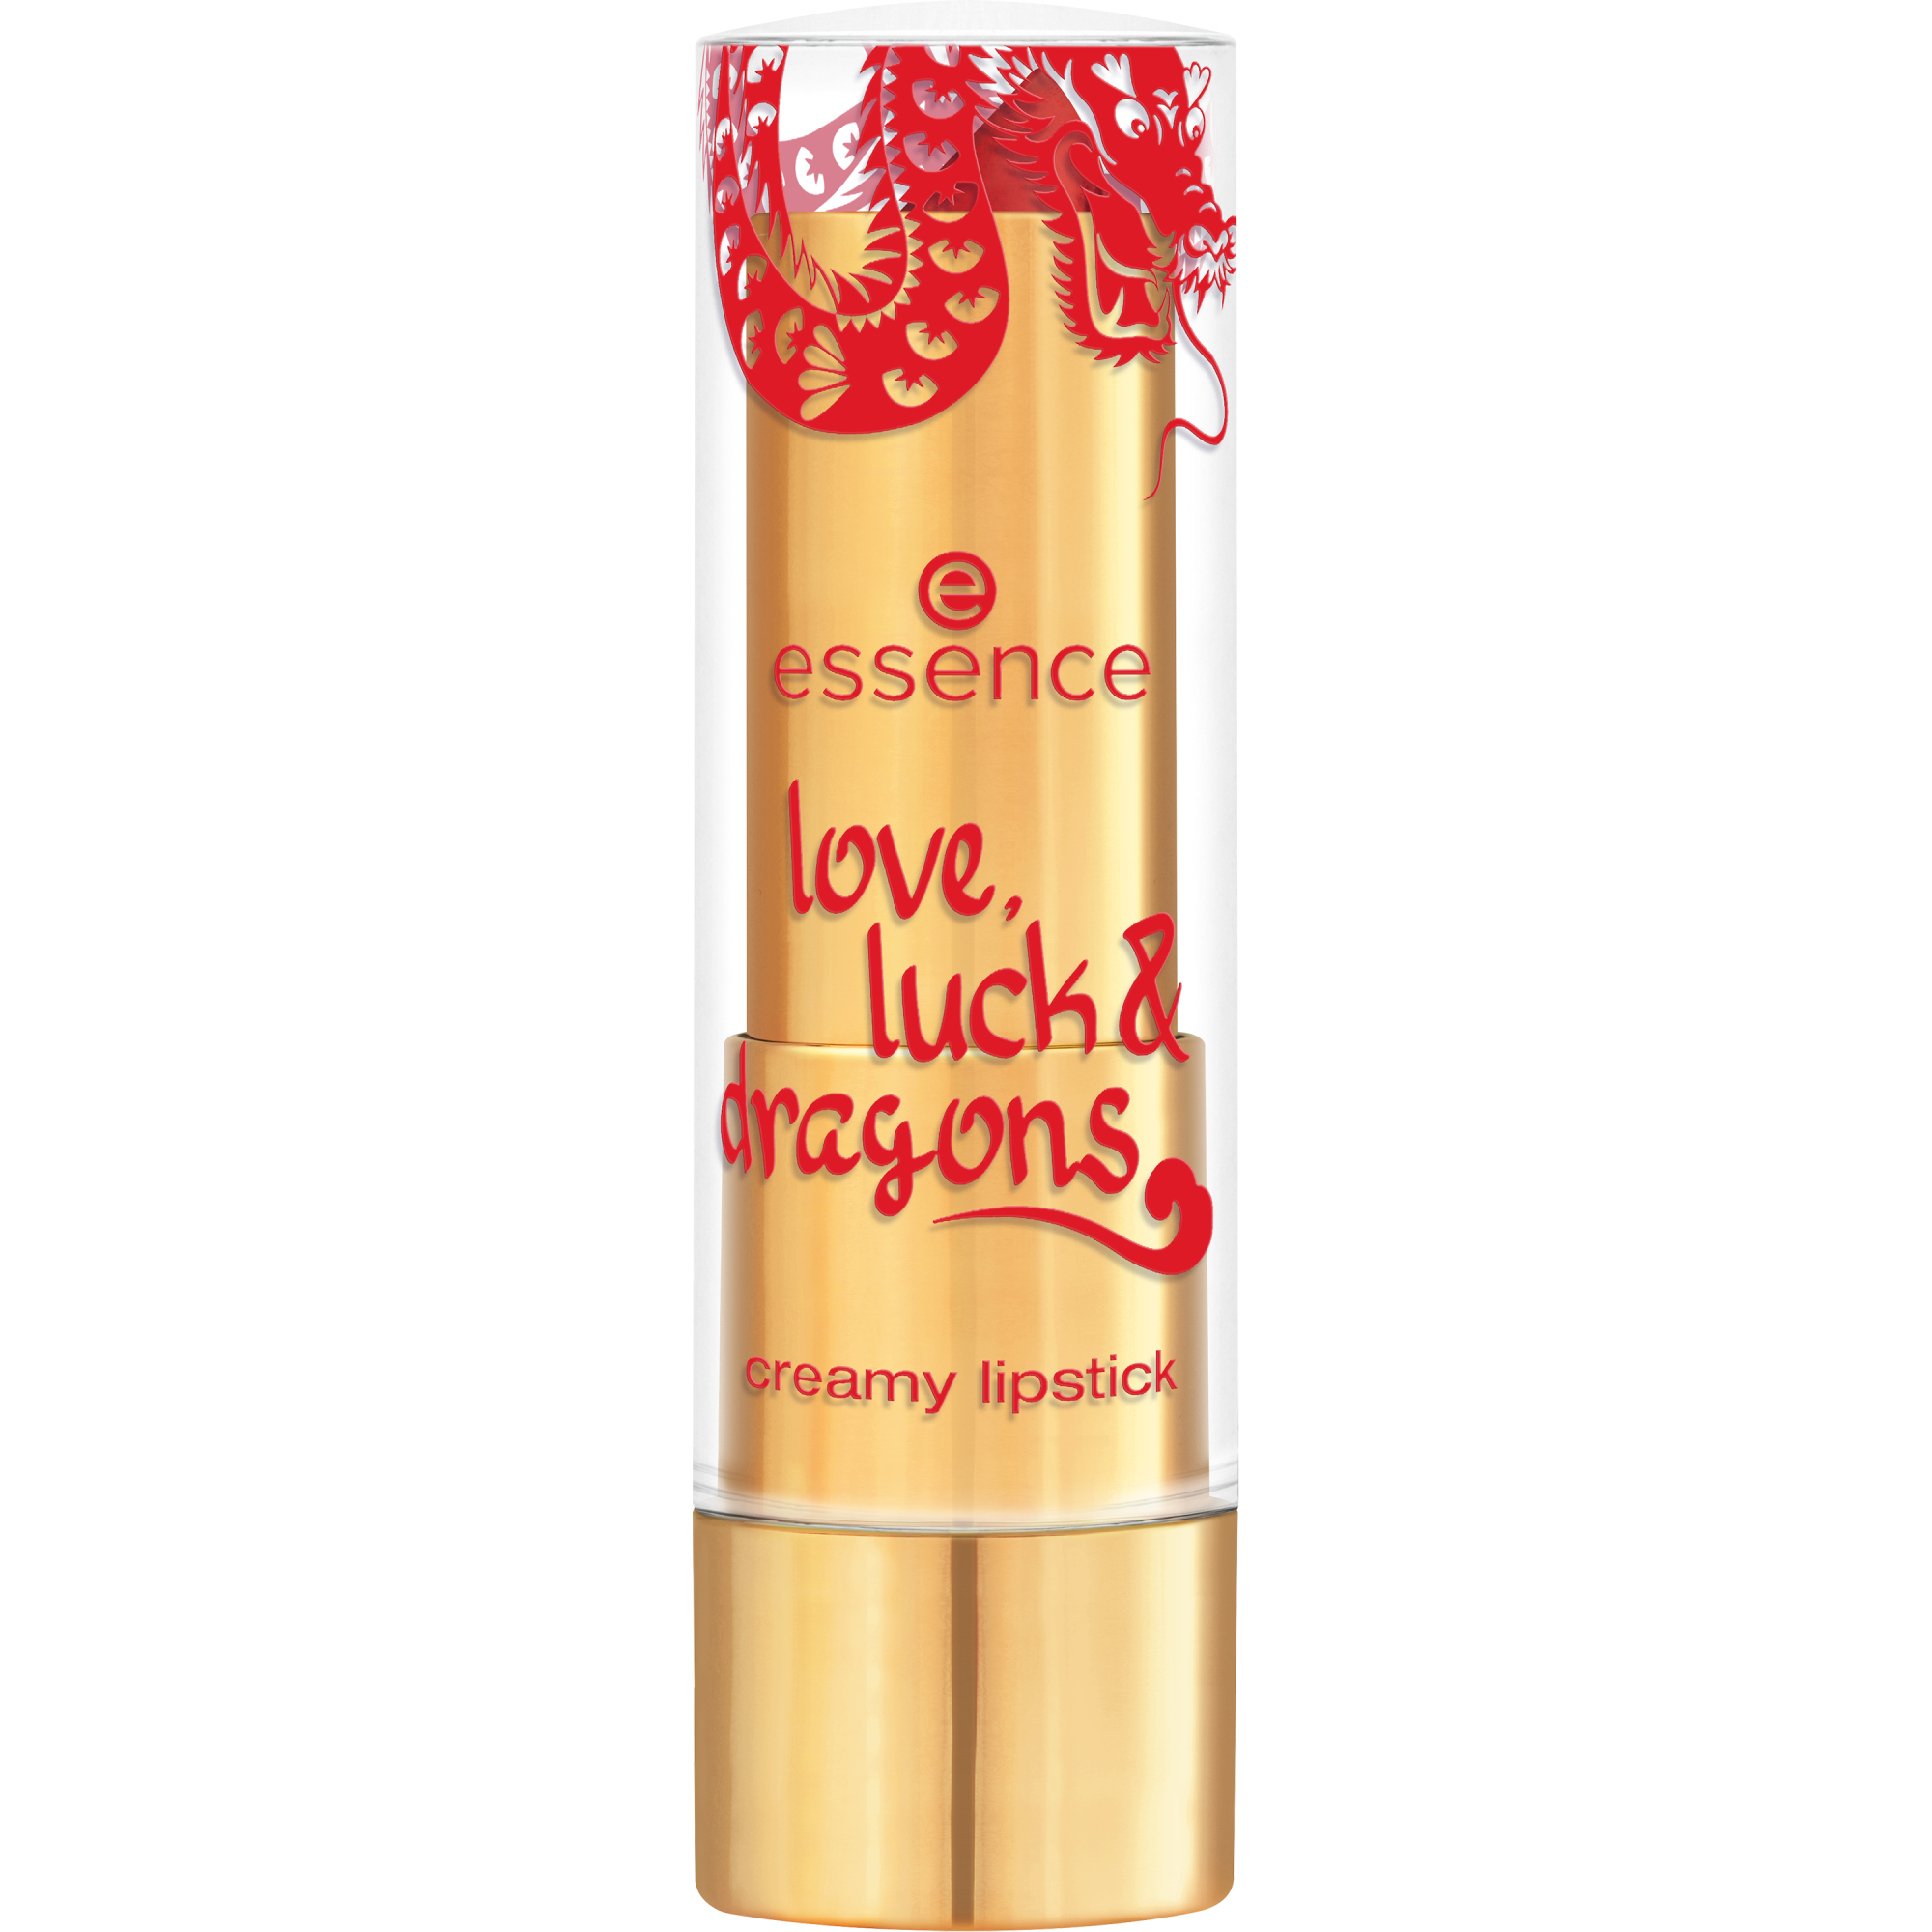 love, luck & dragons creamy lipstick